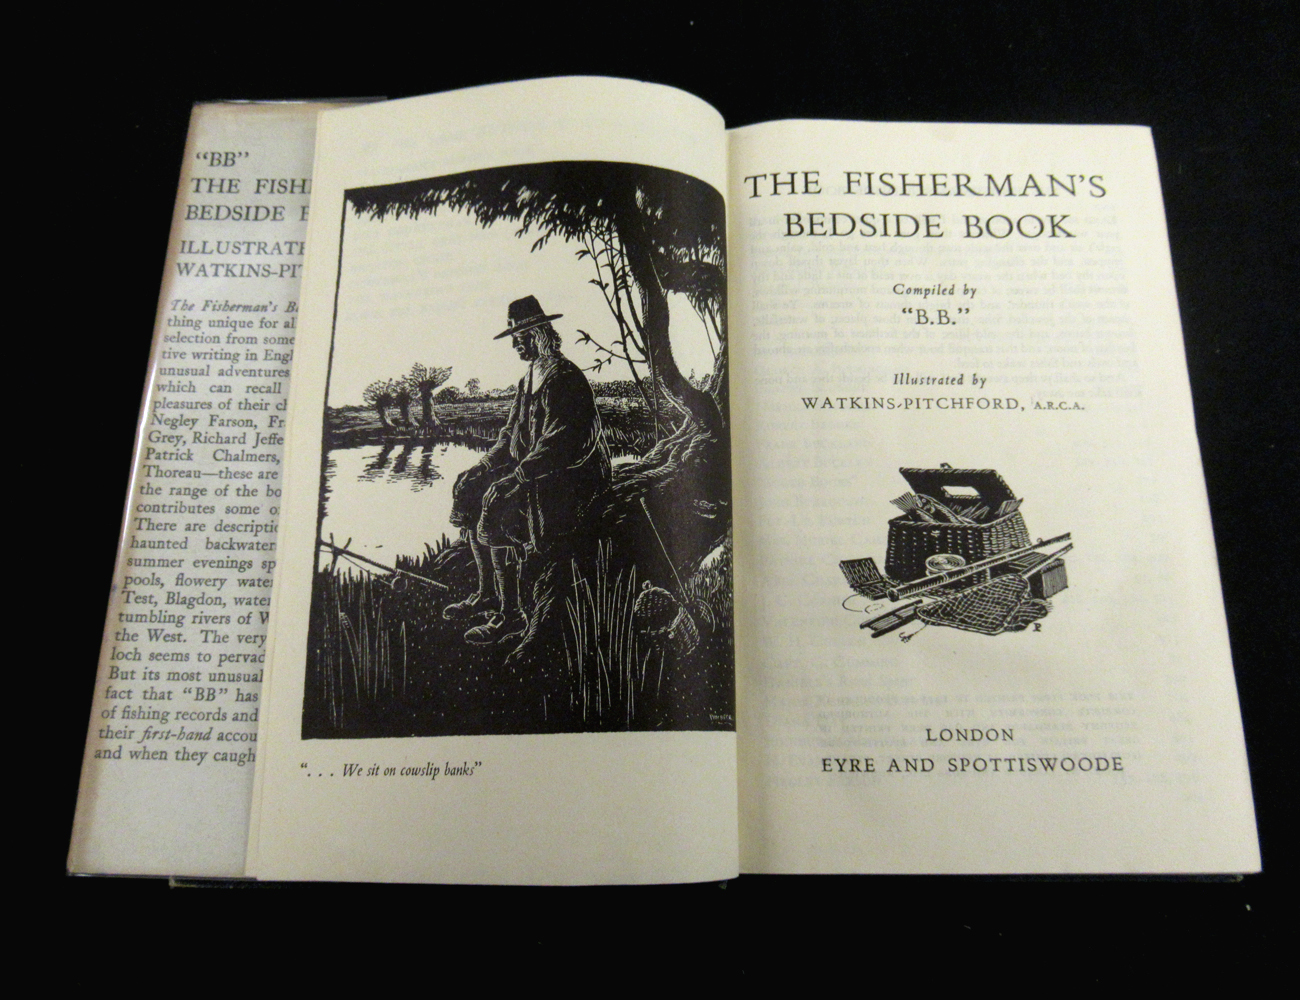 D J WATKINS PITCHFORD "BB": THE FISHERMAN'S BEDSIDE BOOK, London, Eyre & Spottiswoode, 1945, 1st - Image 2 of 2